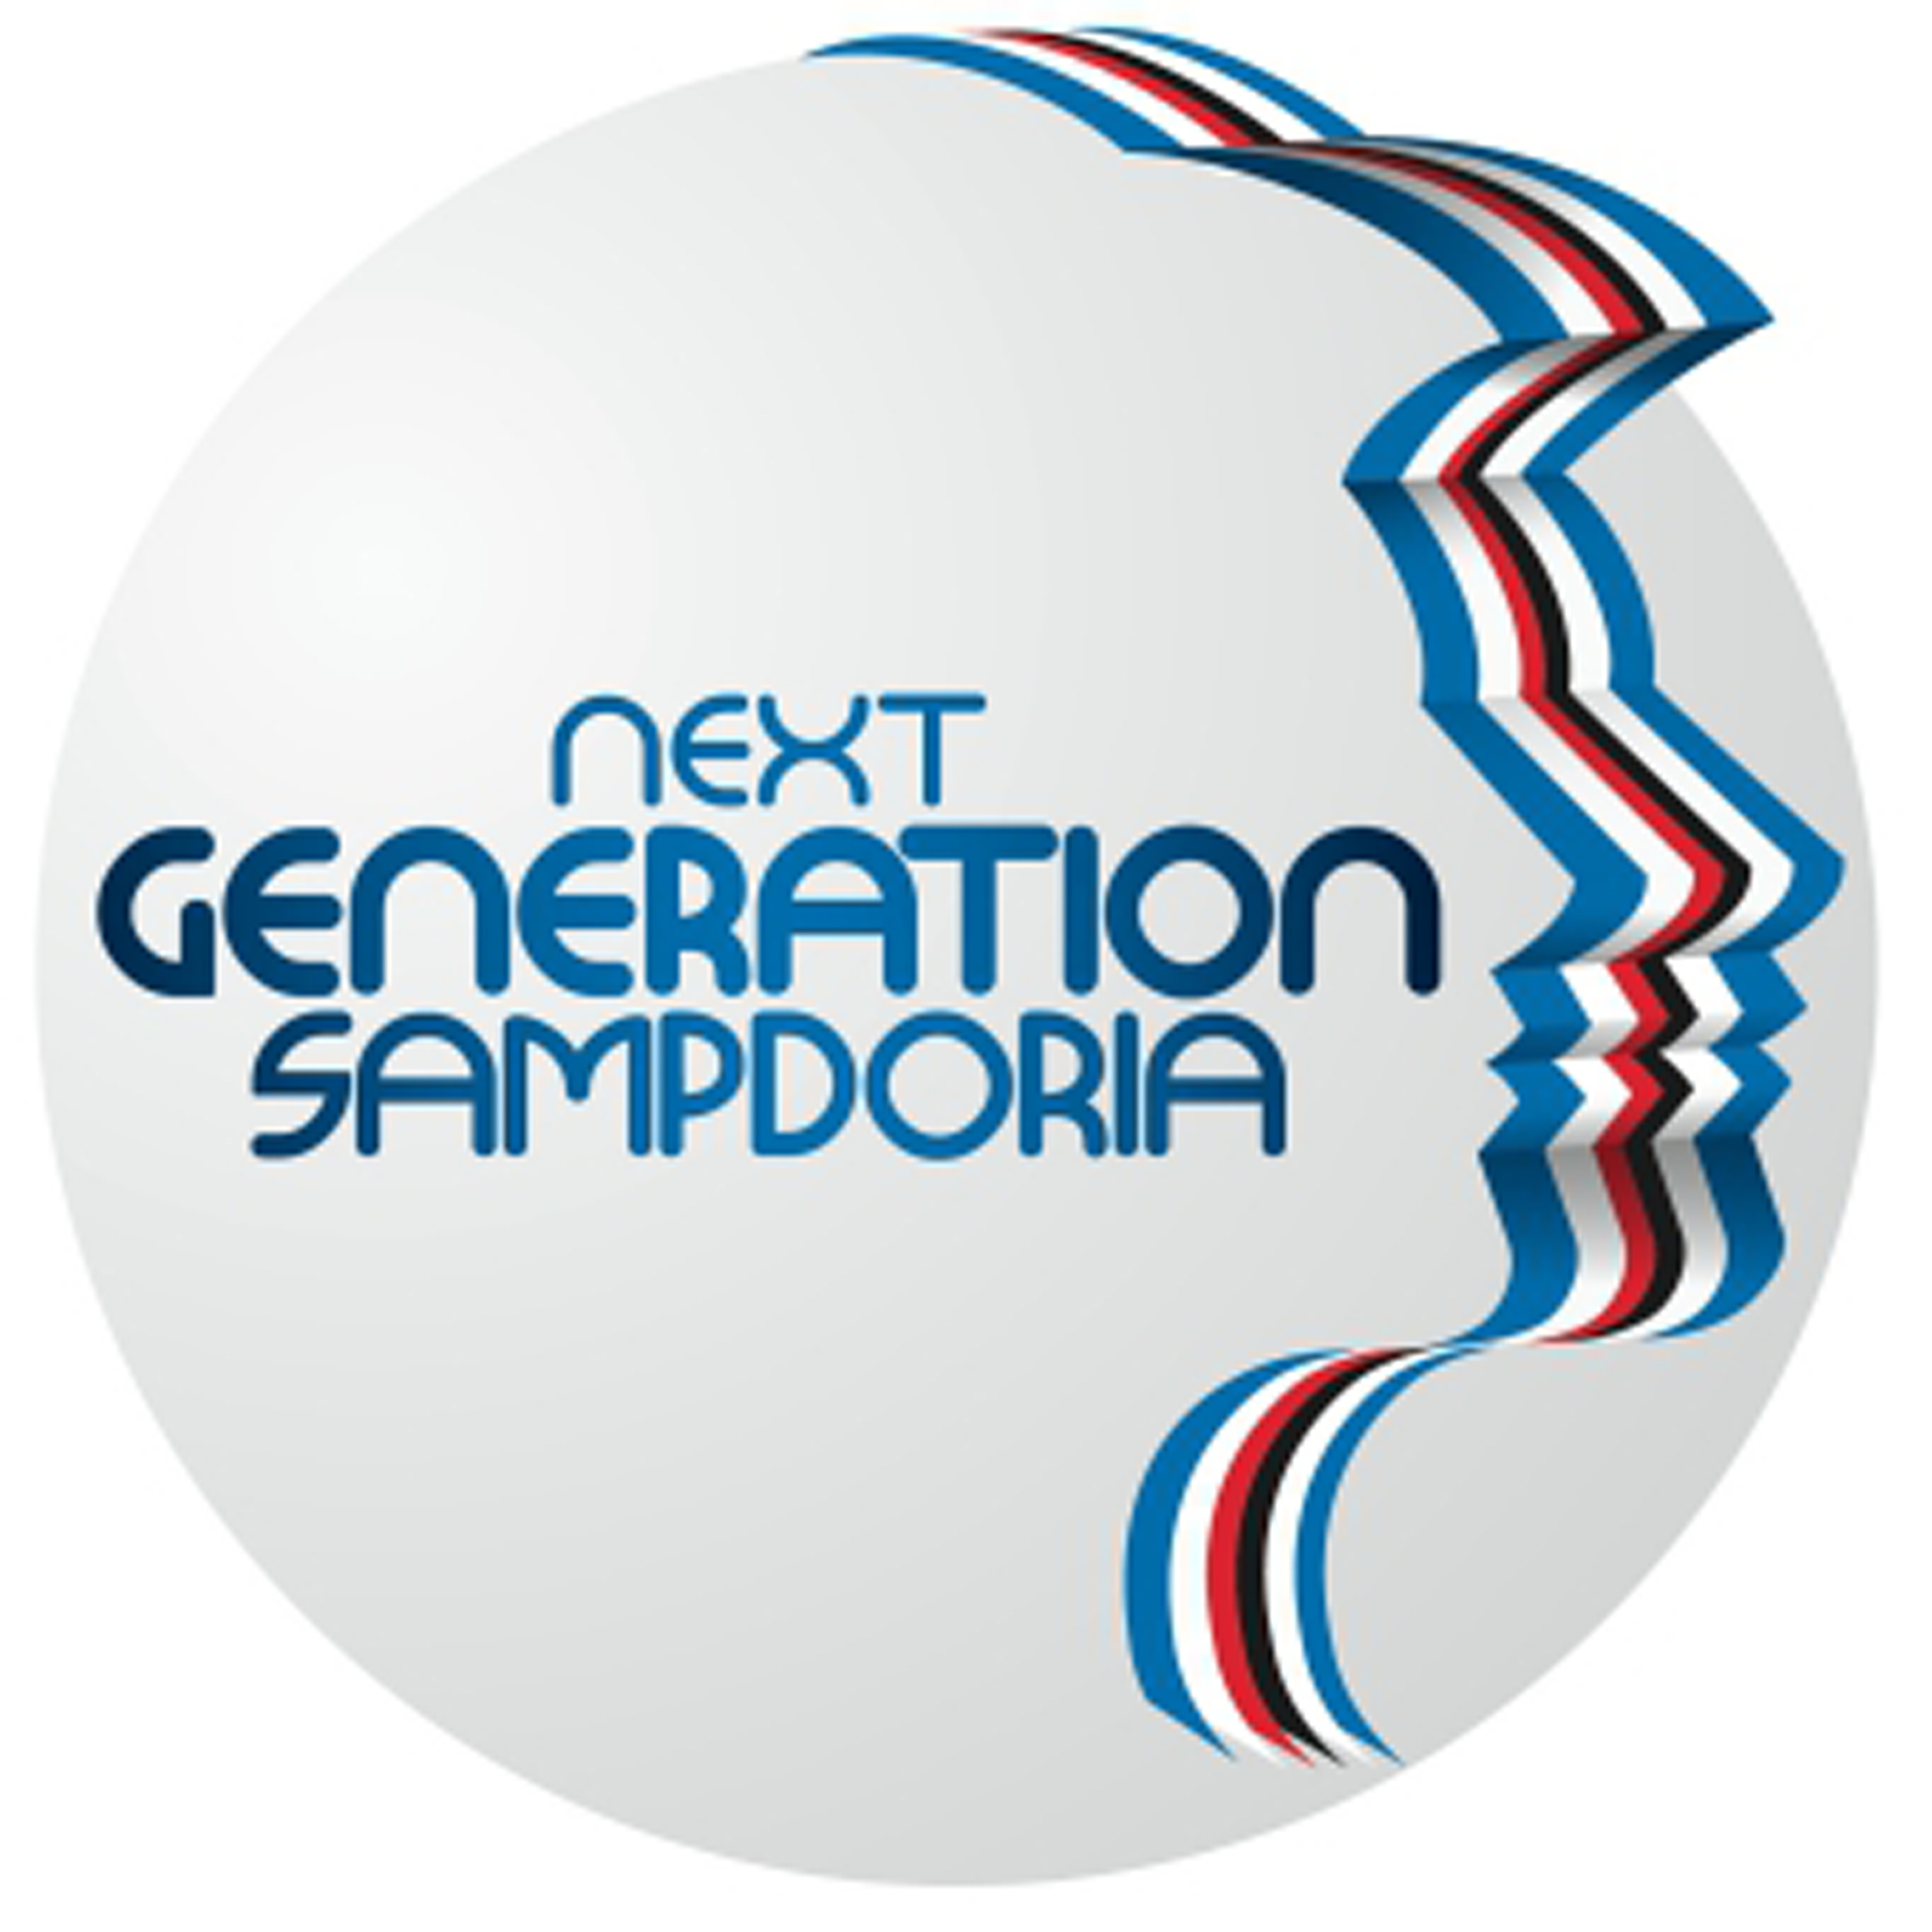 Next Generation Sampdoria 